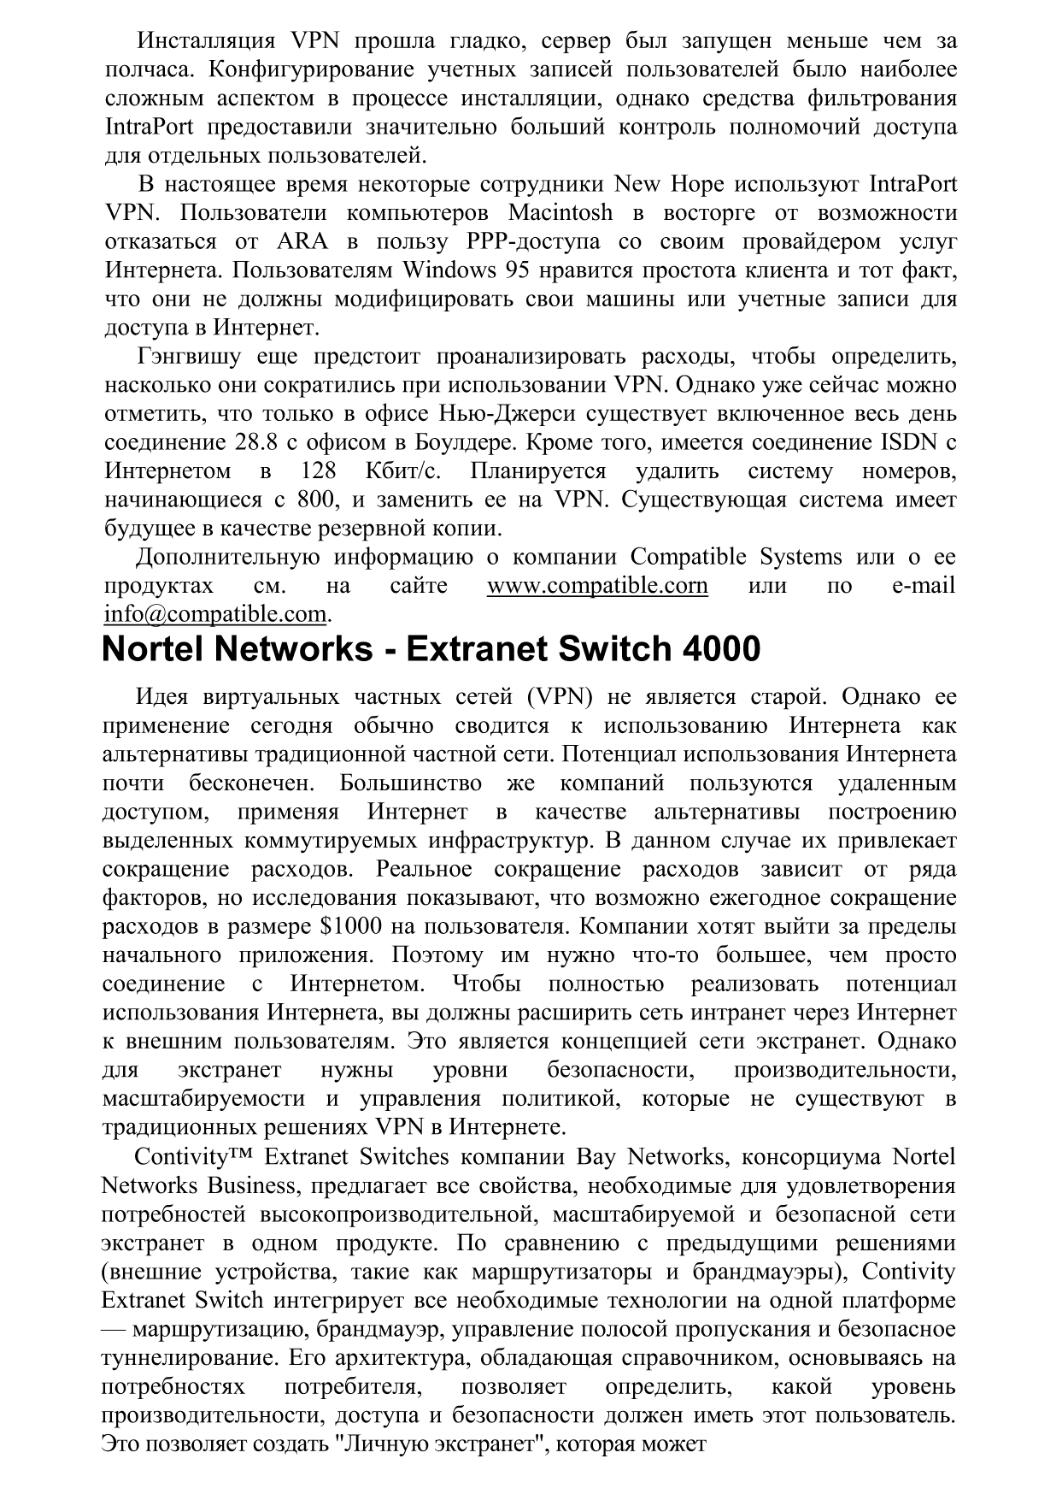 Nortel Networks - Extranet Switch 4000